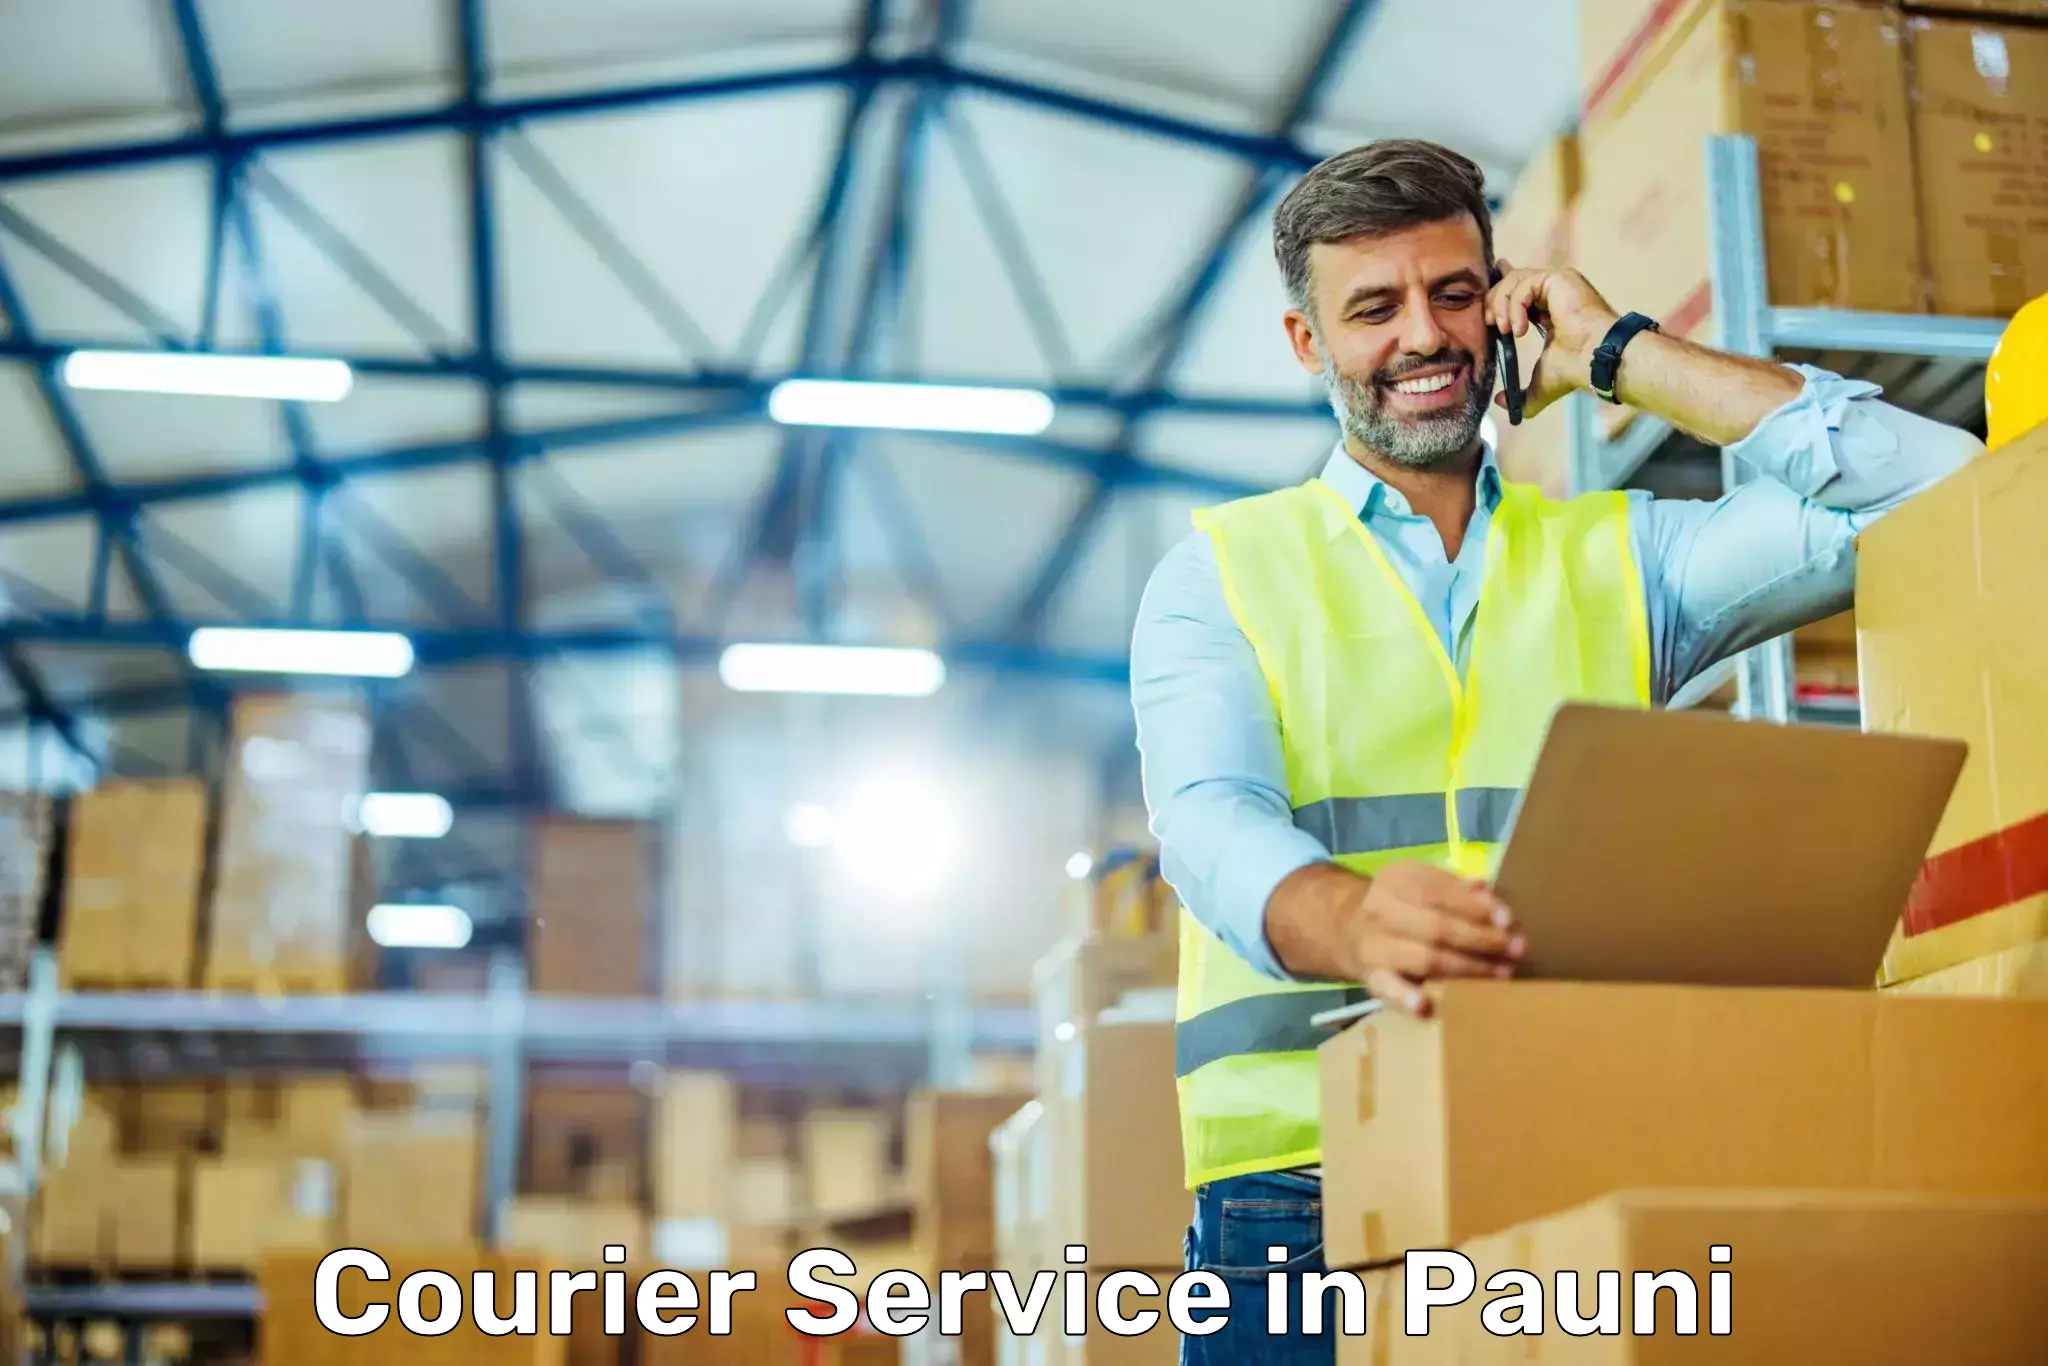 Bulk courier orders in Pauni